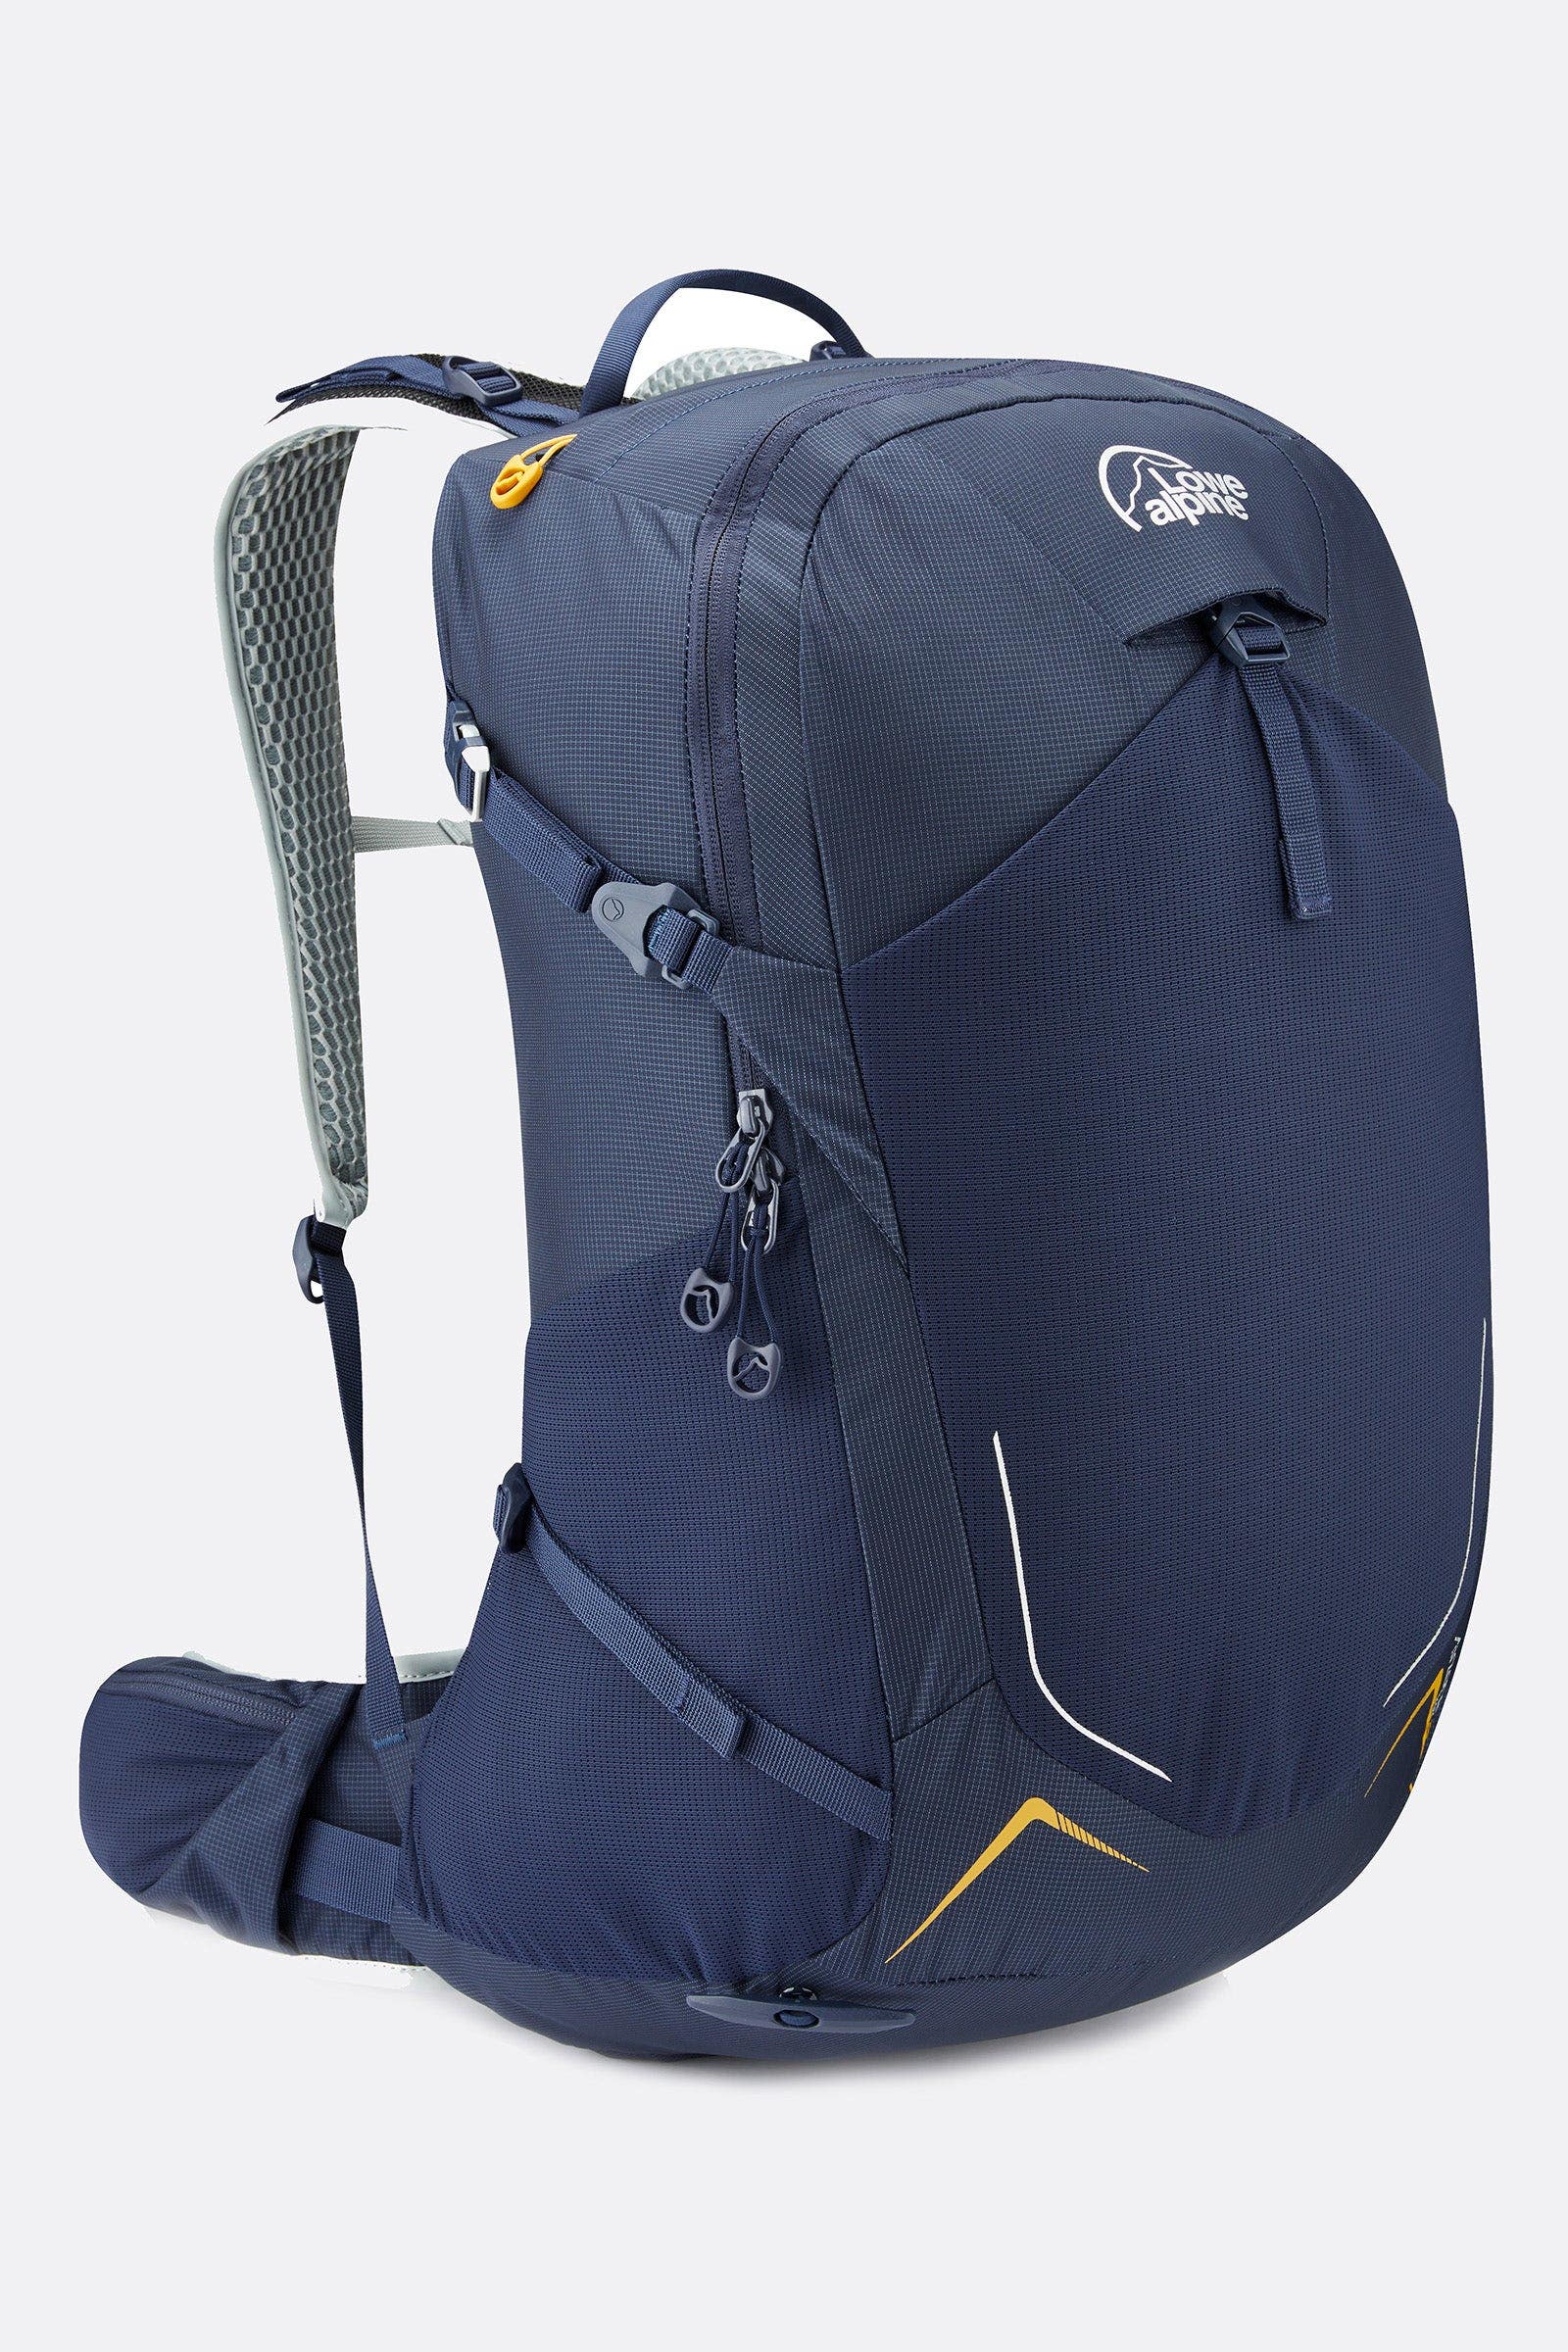 Lowe Alpine AirZone Trek 28L Backpack 